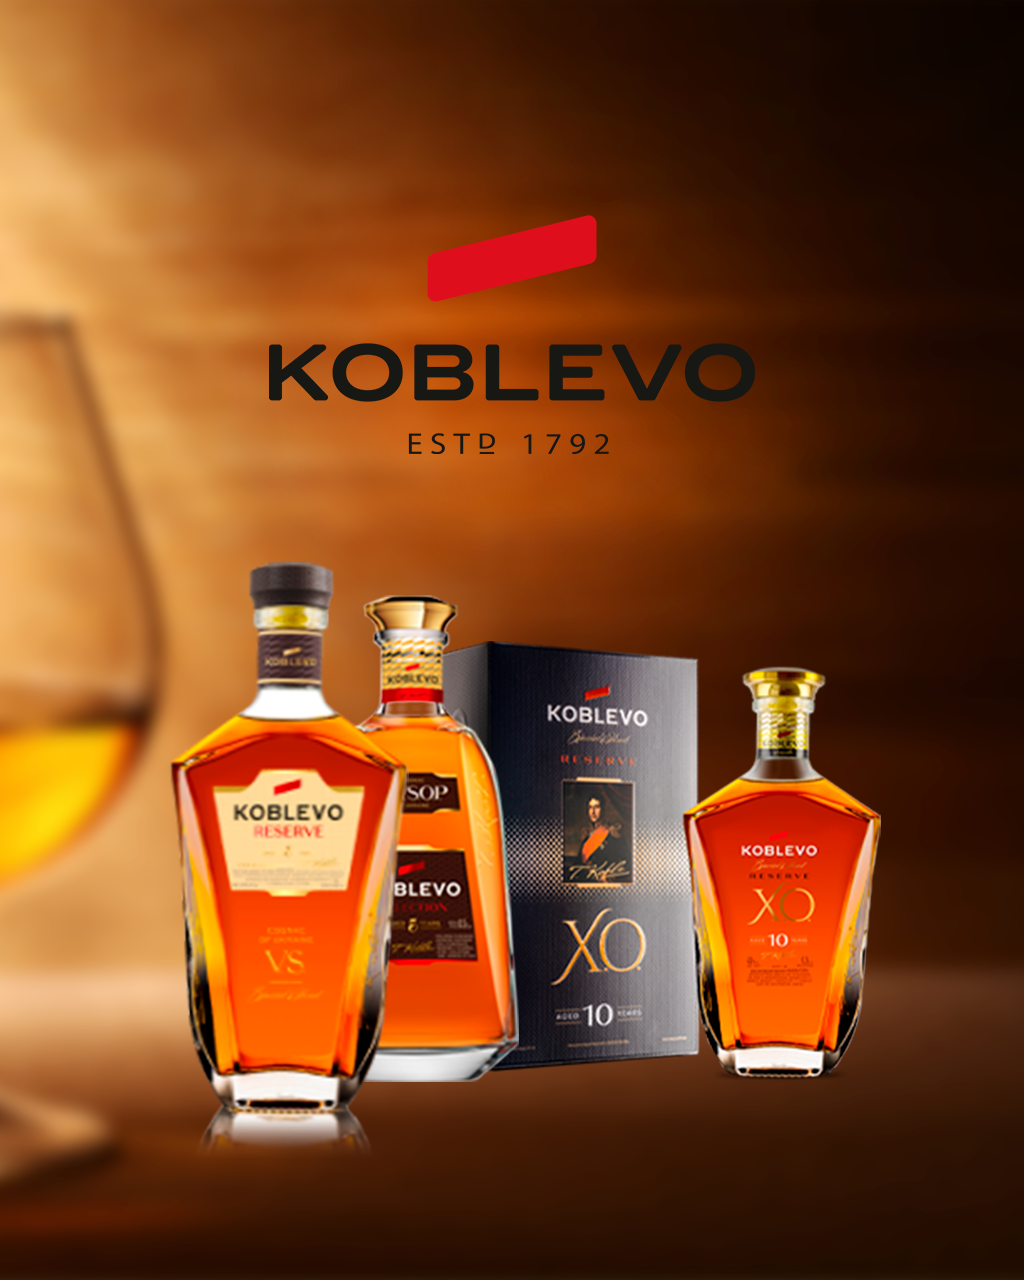 KOBLEVO - brandy for true connoisseurs!